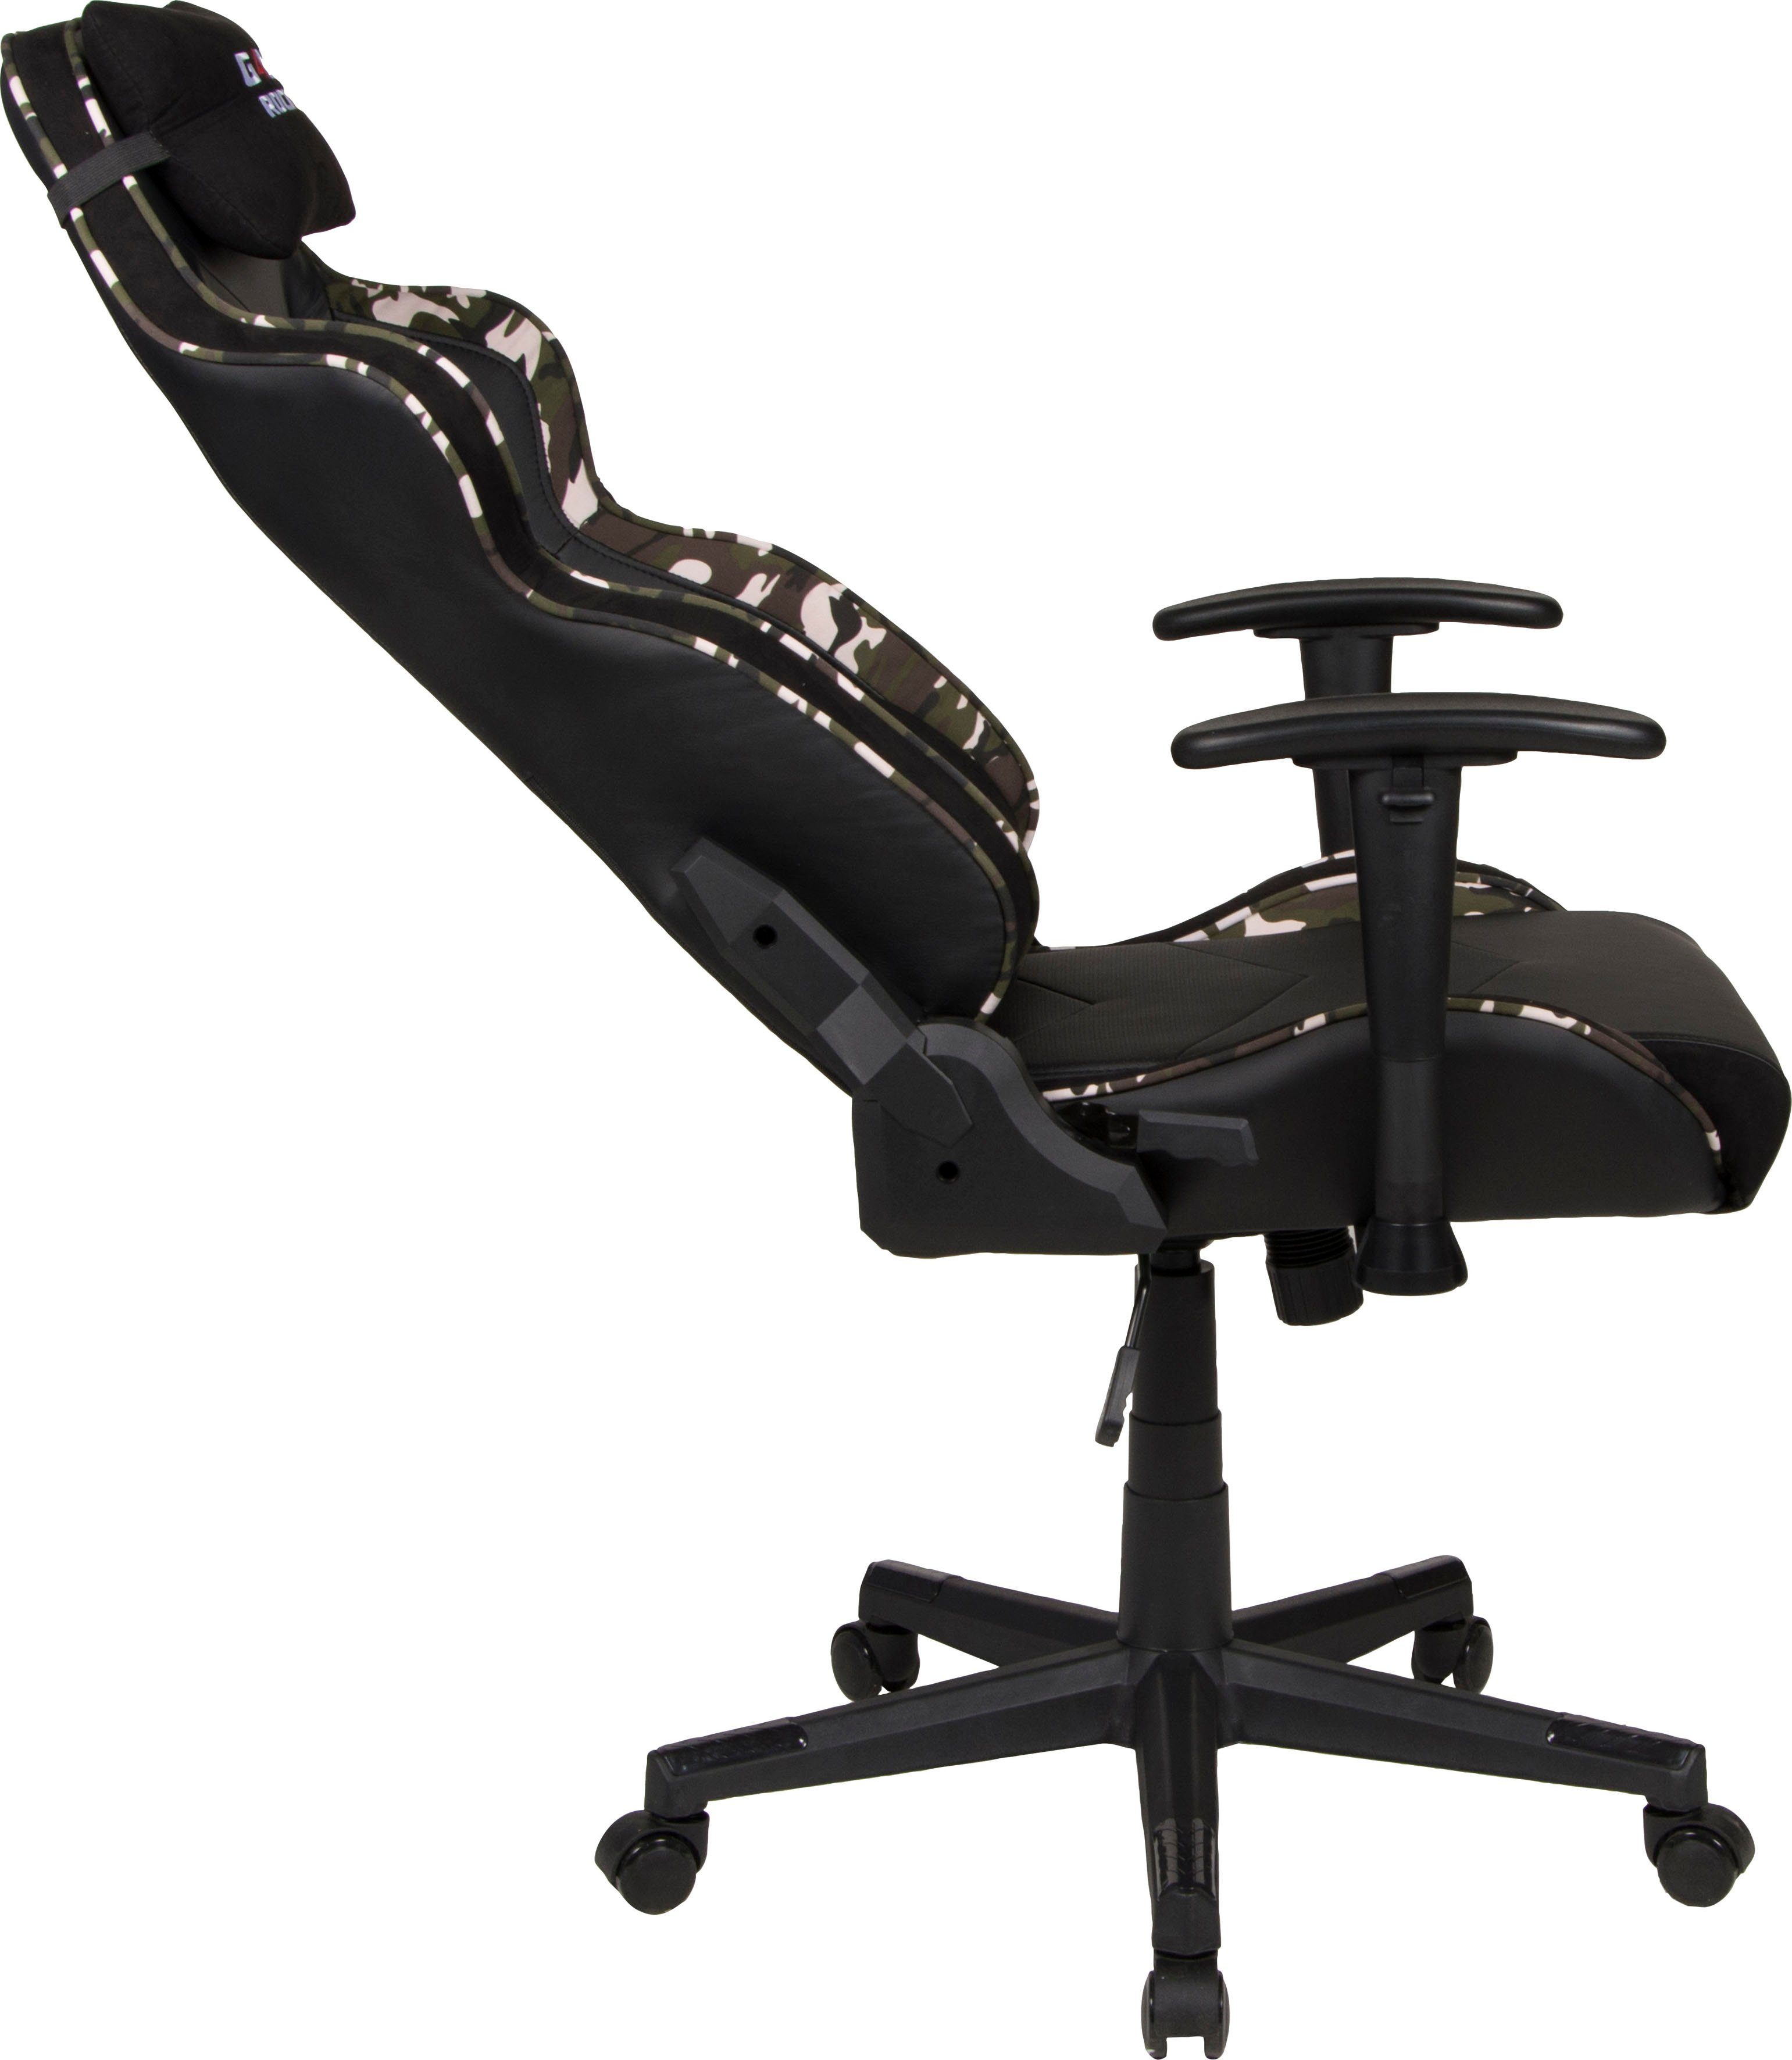 Duo Collection Chefsessel Camouflage schwarz/camouflage Gaming grün Game-Rocker Optik Chair G-30, in